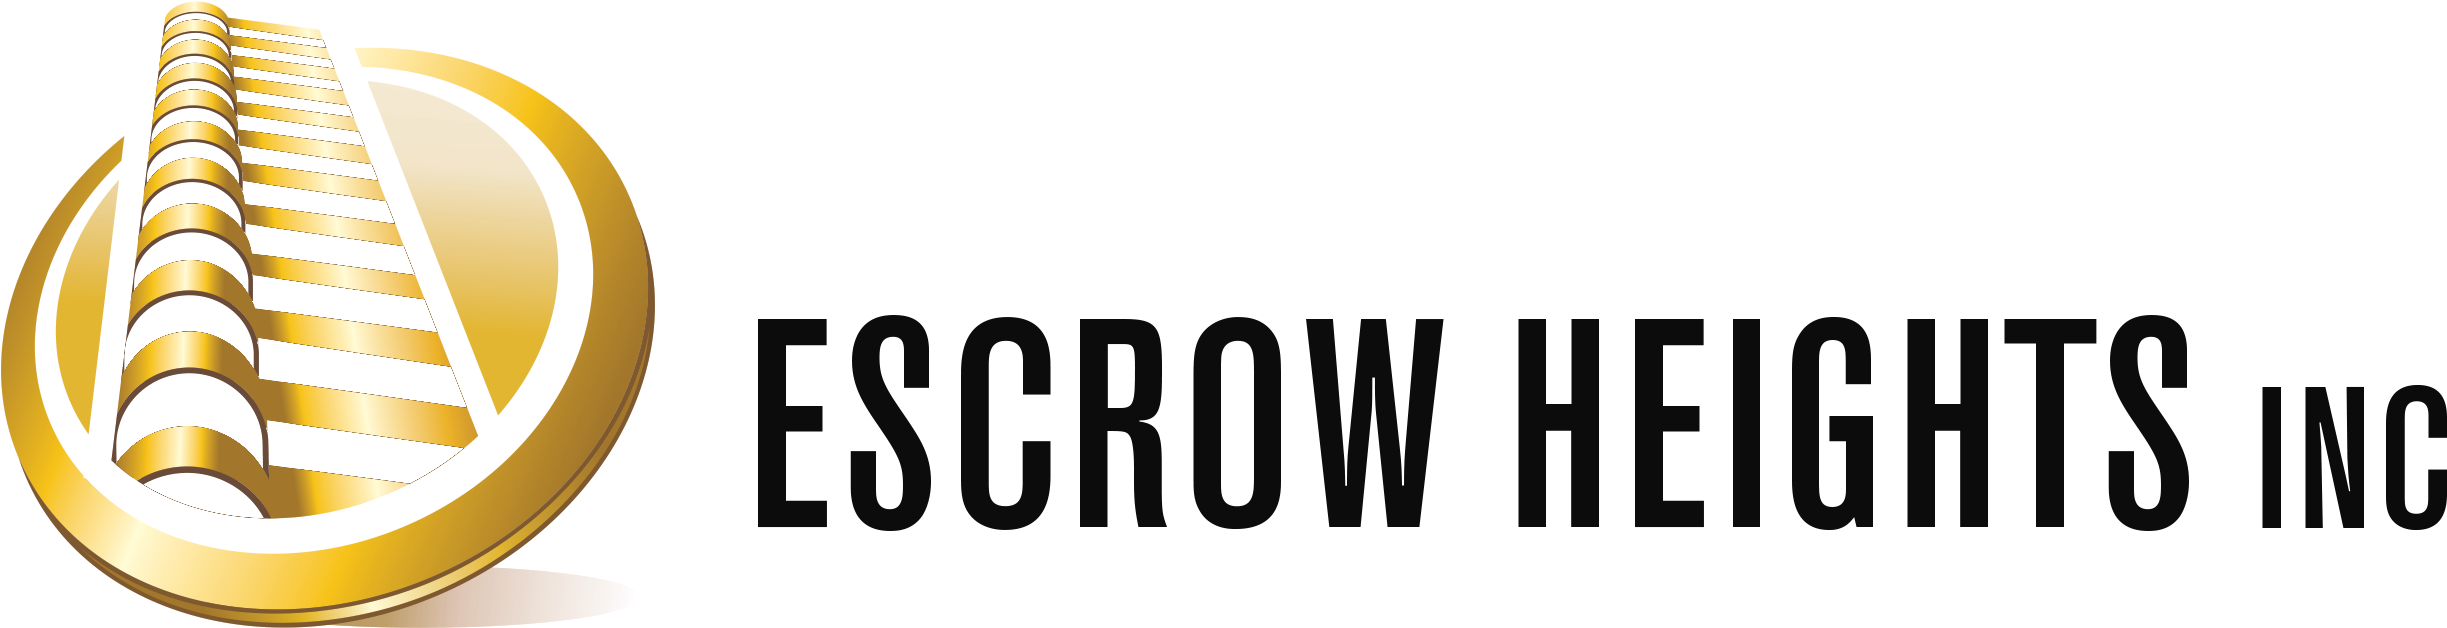 Premier Escrow Services In California - Trivia Night Poster (2500x640)